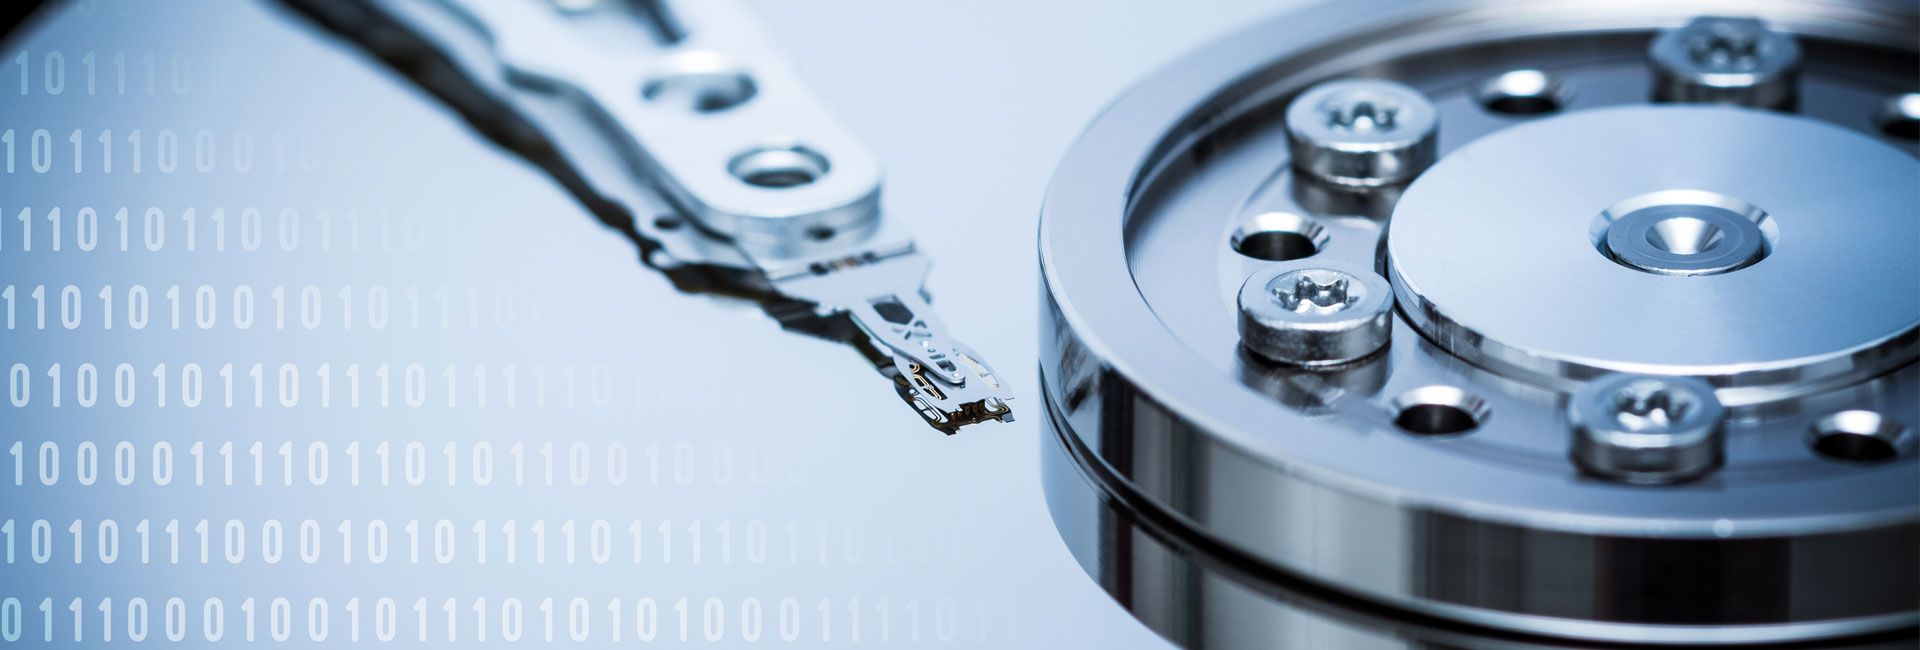 Data storage backup service for hard drives